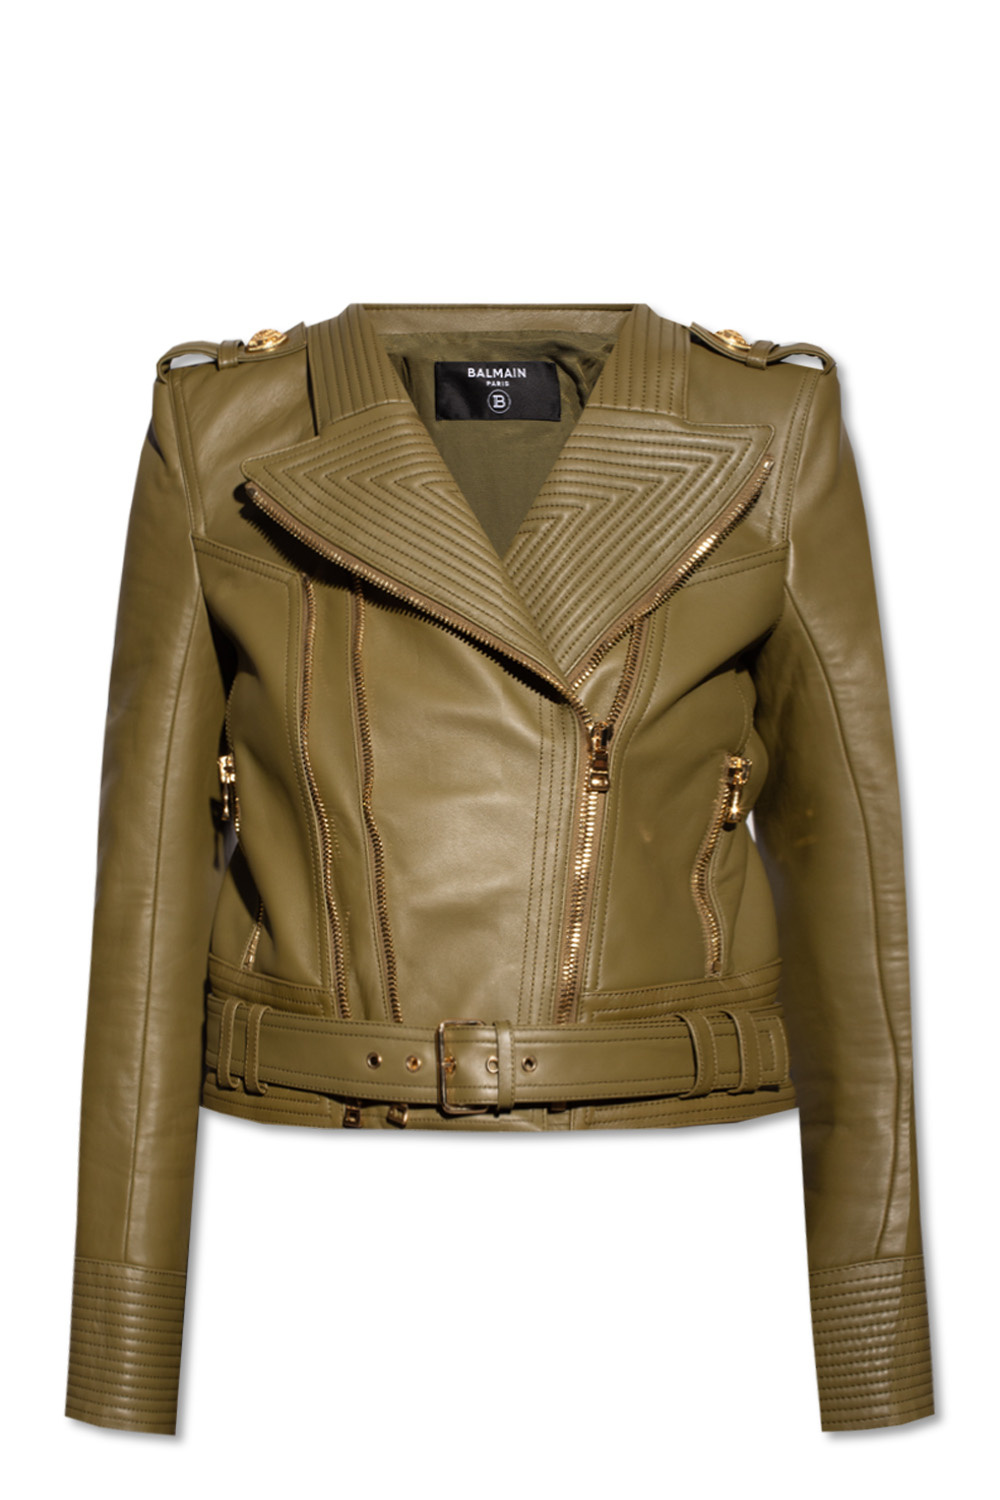 slank Vestlig Tårer Green Leather jacket Balmain - Vitkac Italy